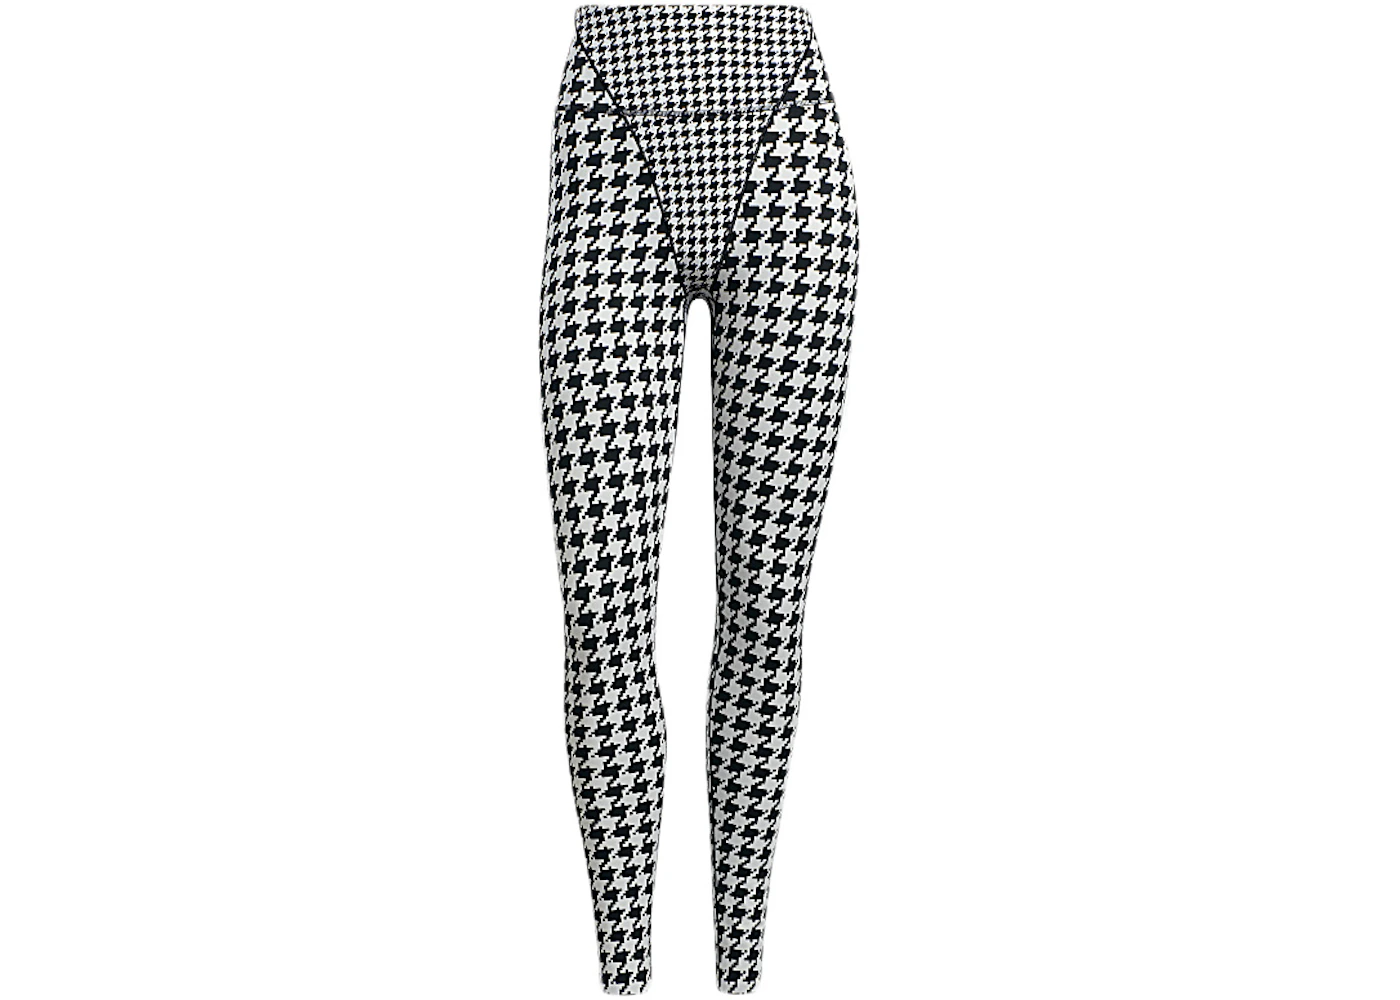 Adidas Ivy Park Halls Of Ivy 3-Stripes Jumpsuit (All Gender) Clear Grey ...